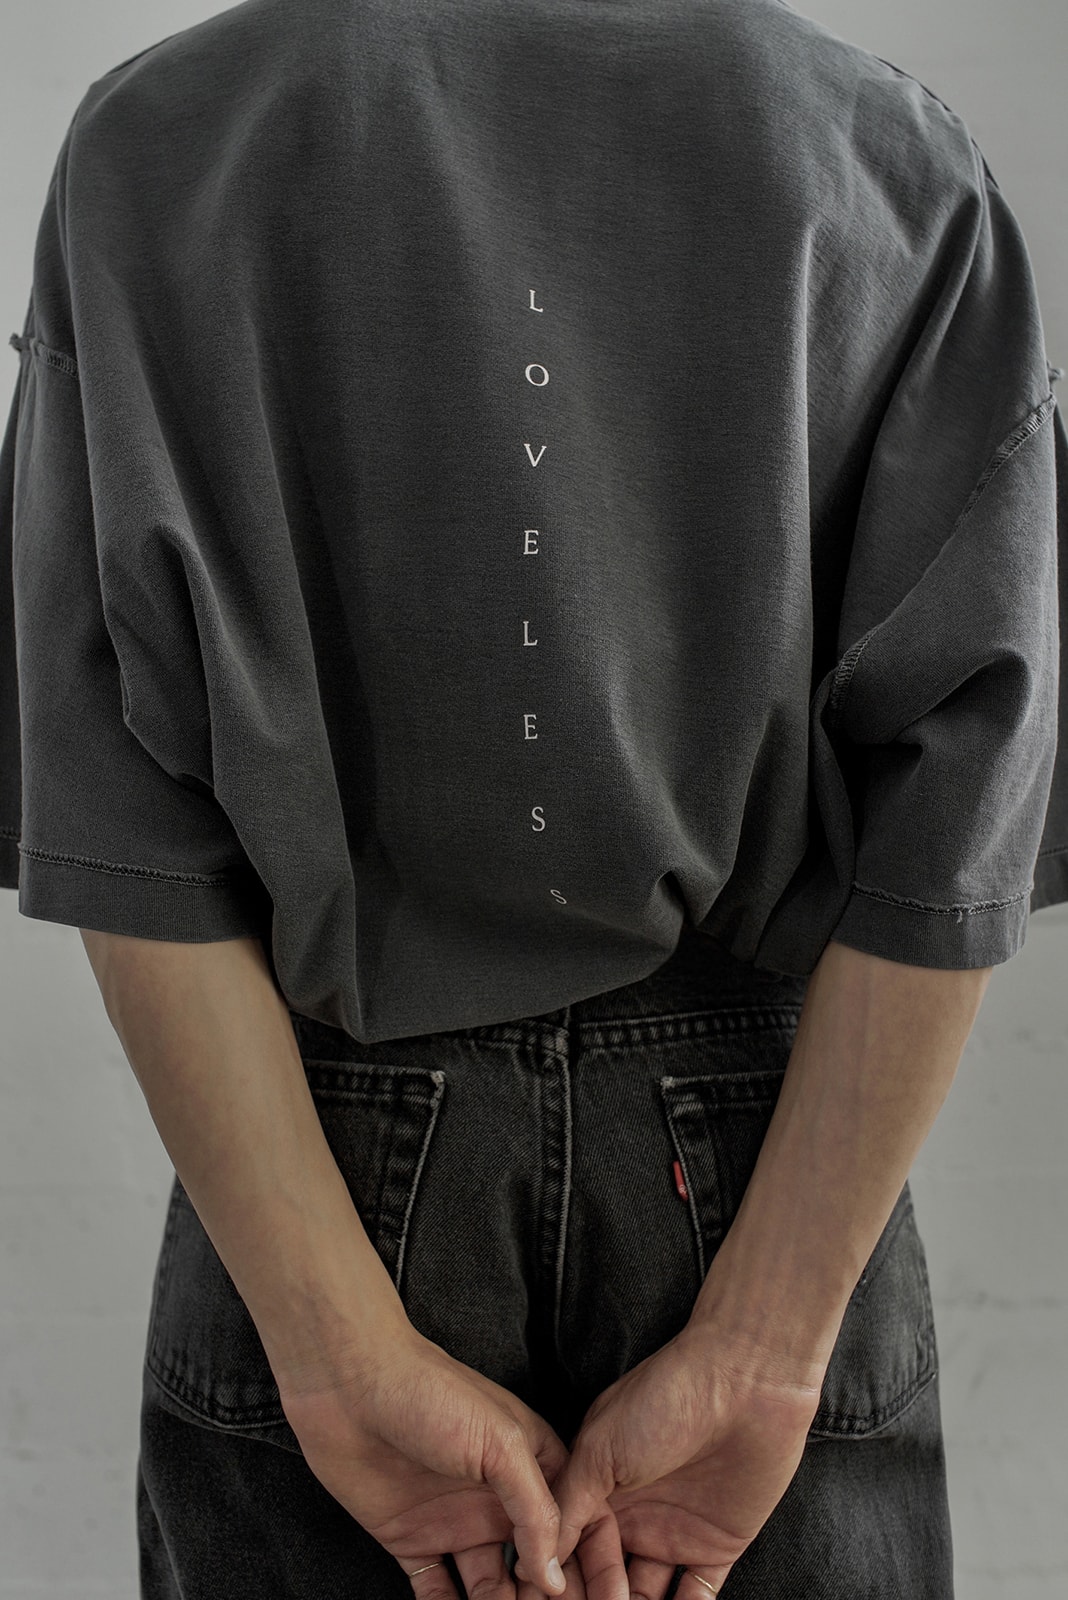 Luke Vicious Lovesong Collection Lookbook custom bespoke shirts release info